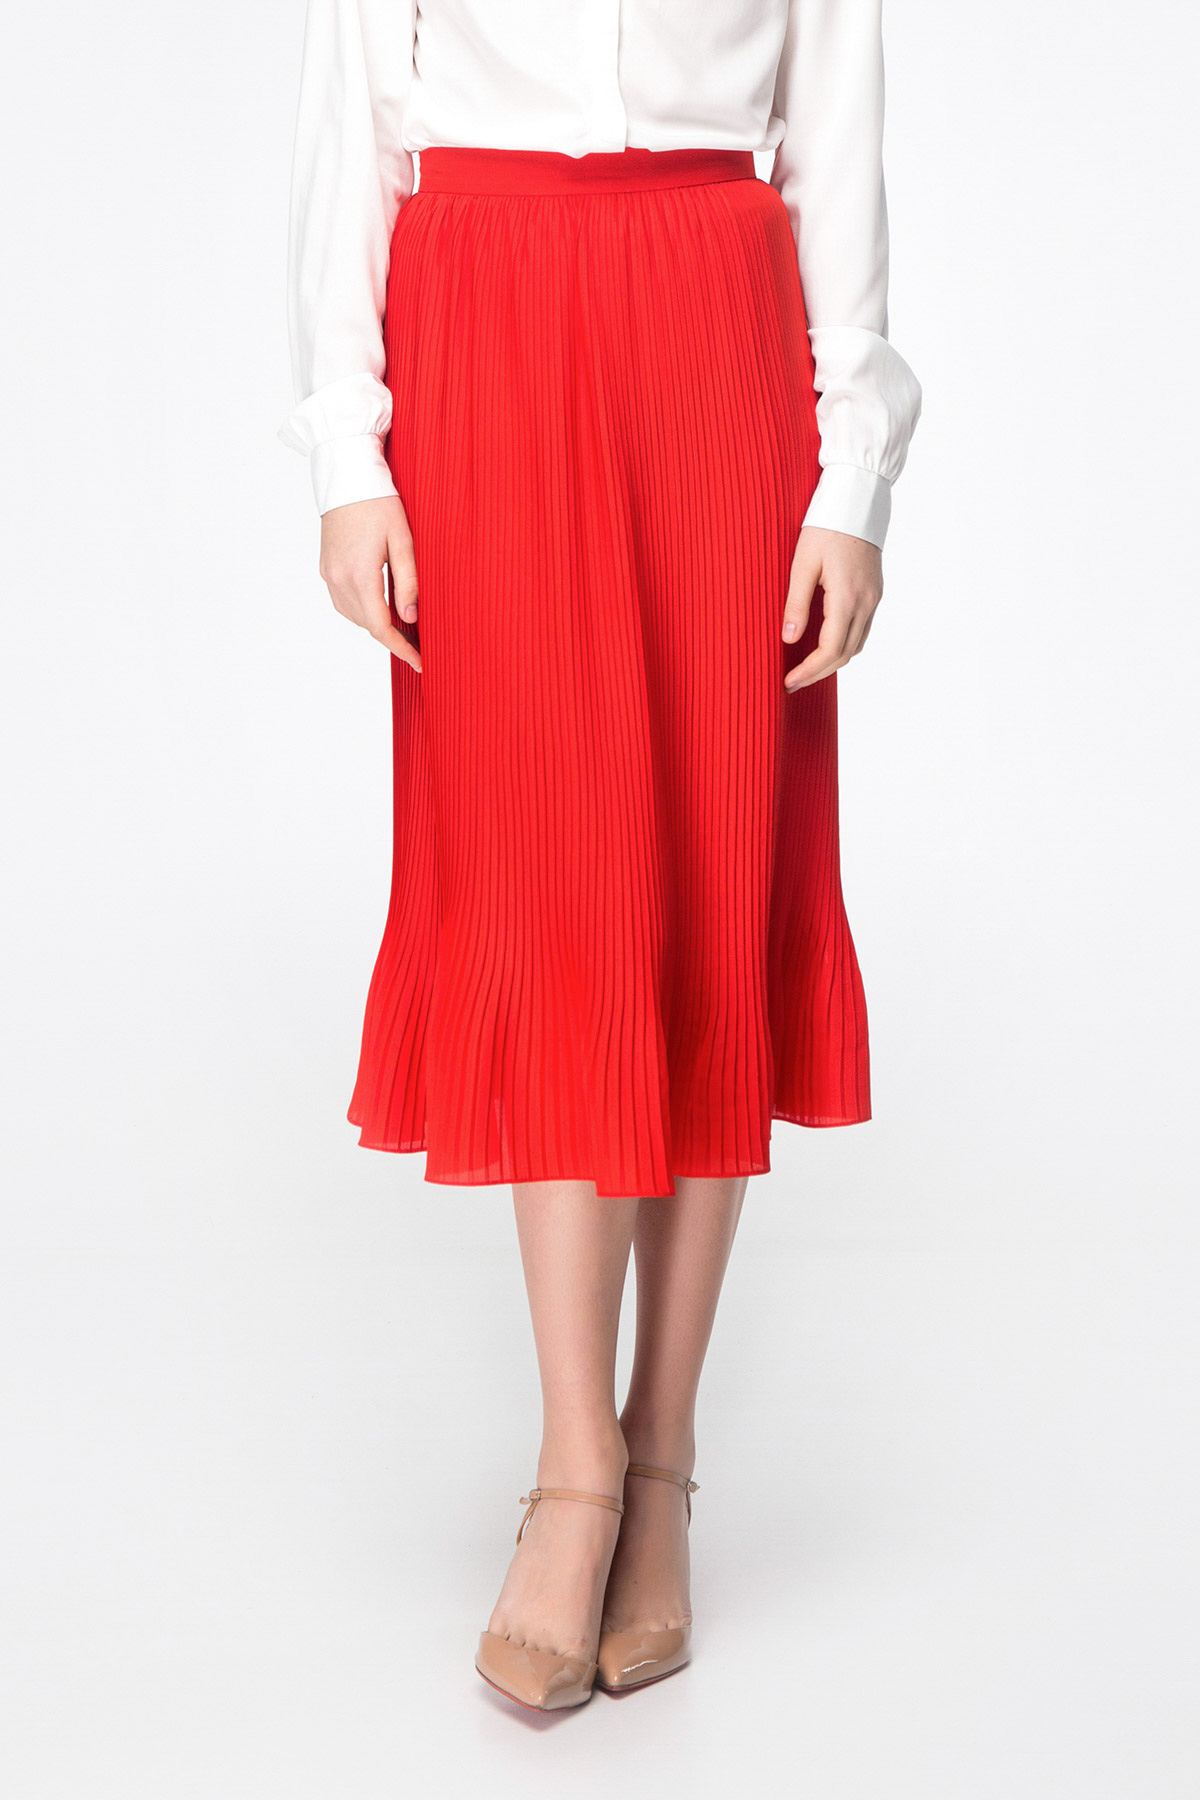 Red pleated midi skirt, photo 2